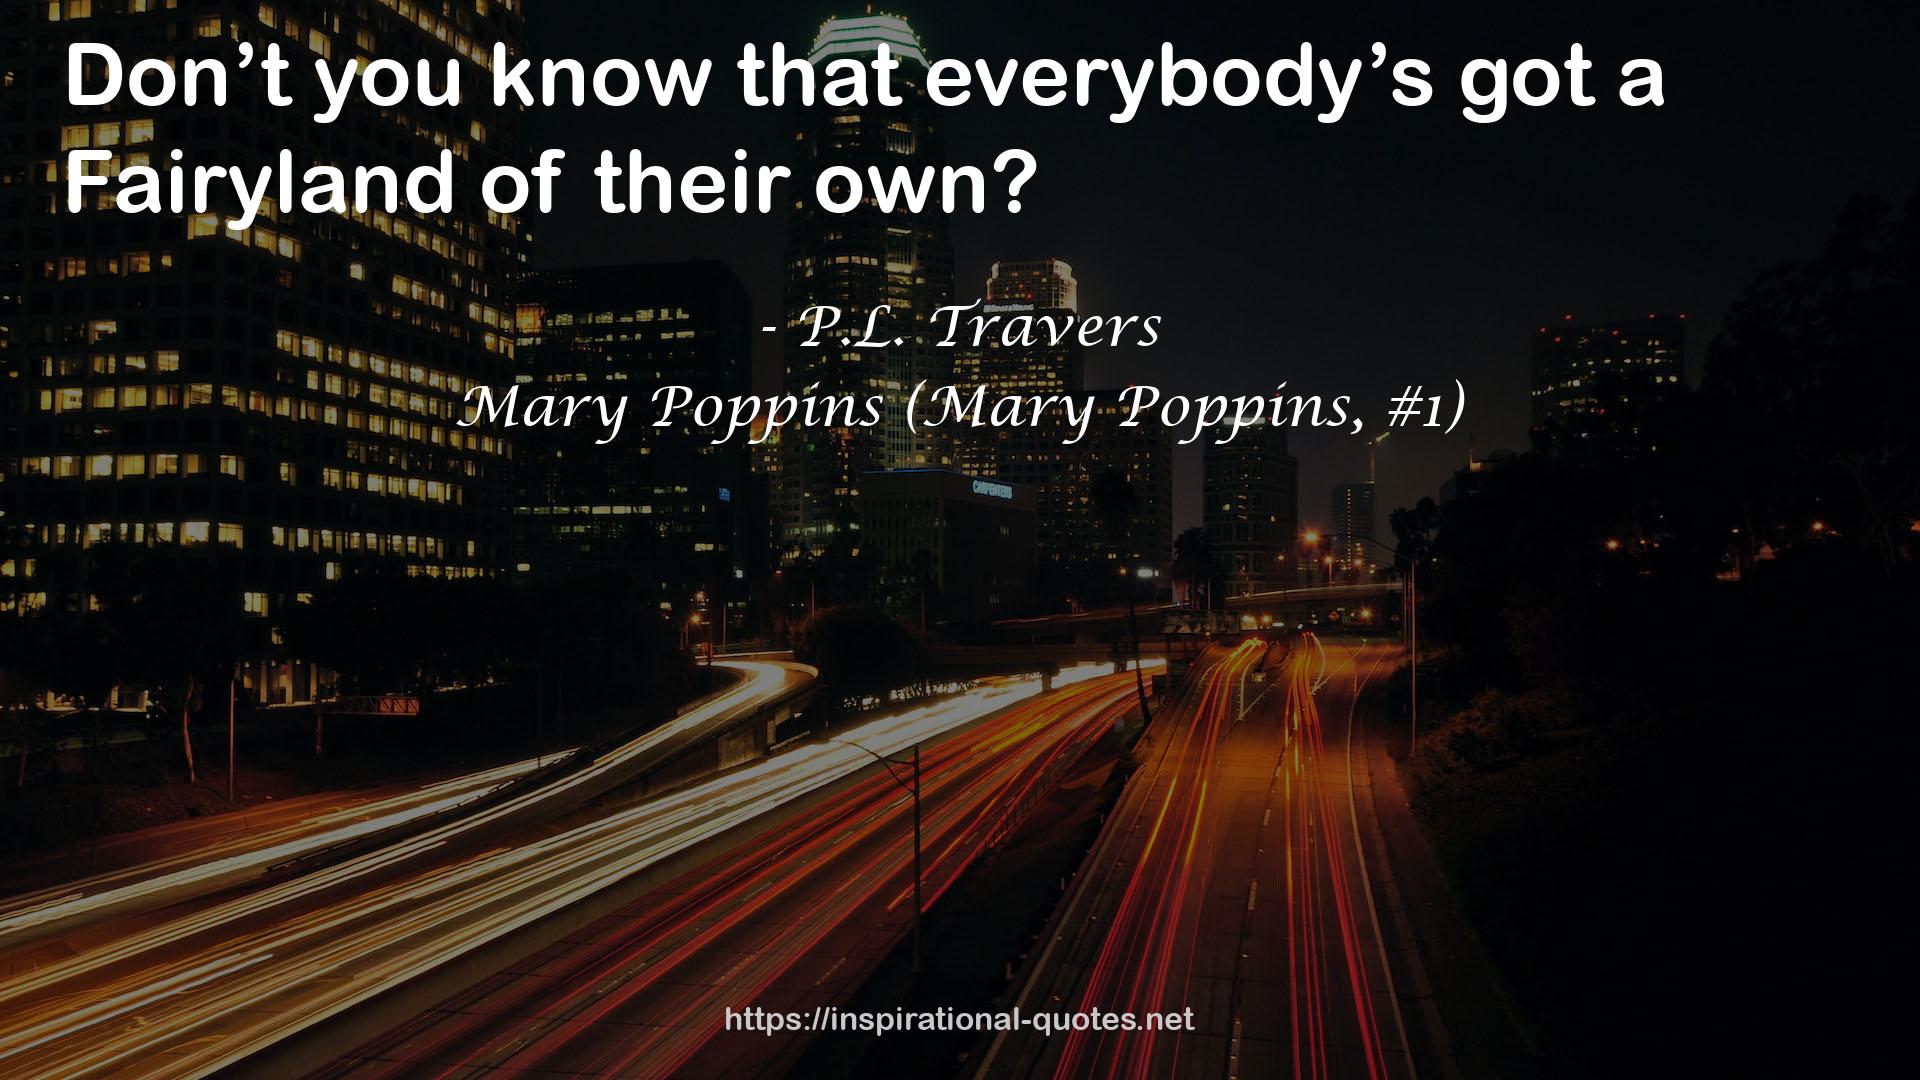 Mary Poppins (Mary Poppins, #1) QUOTES